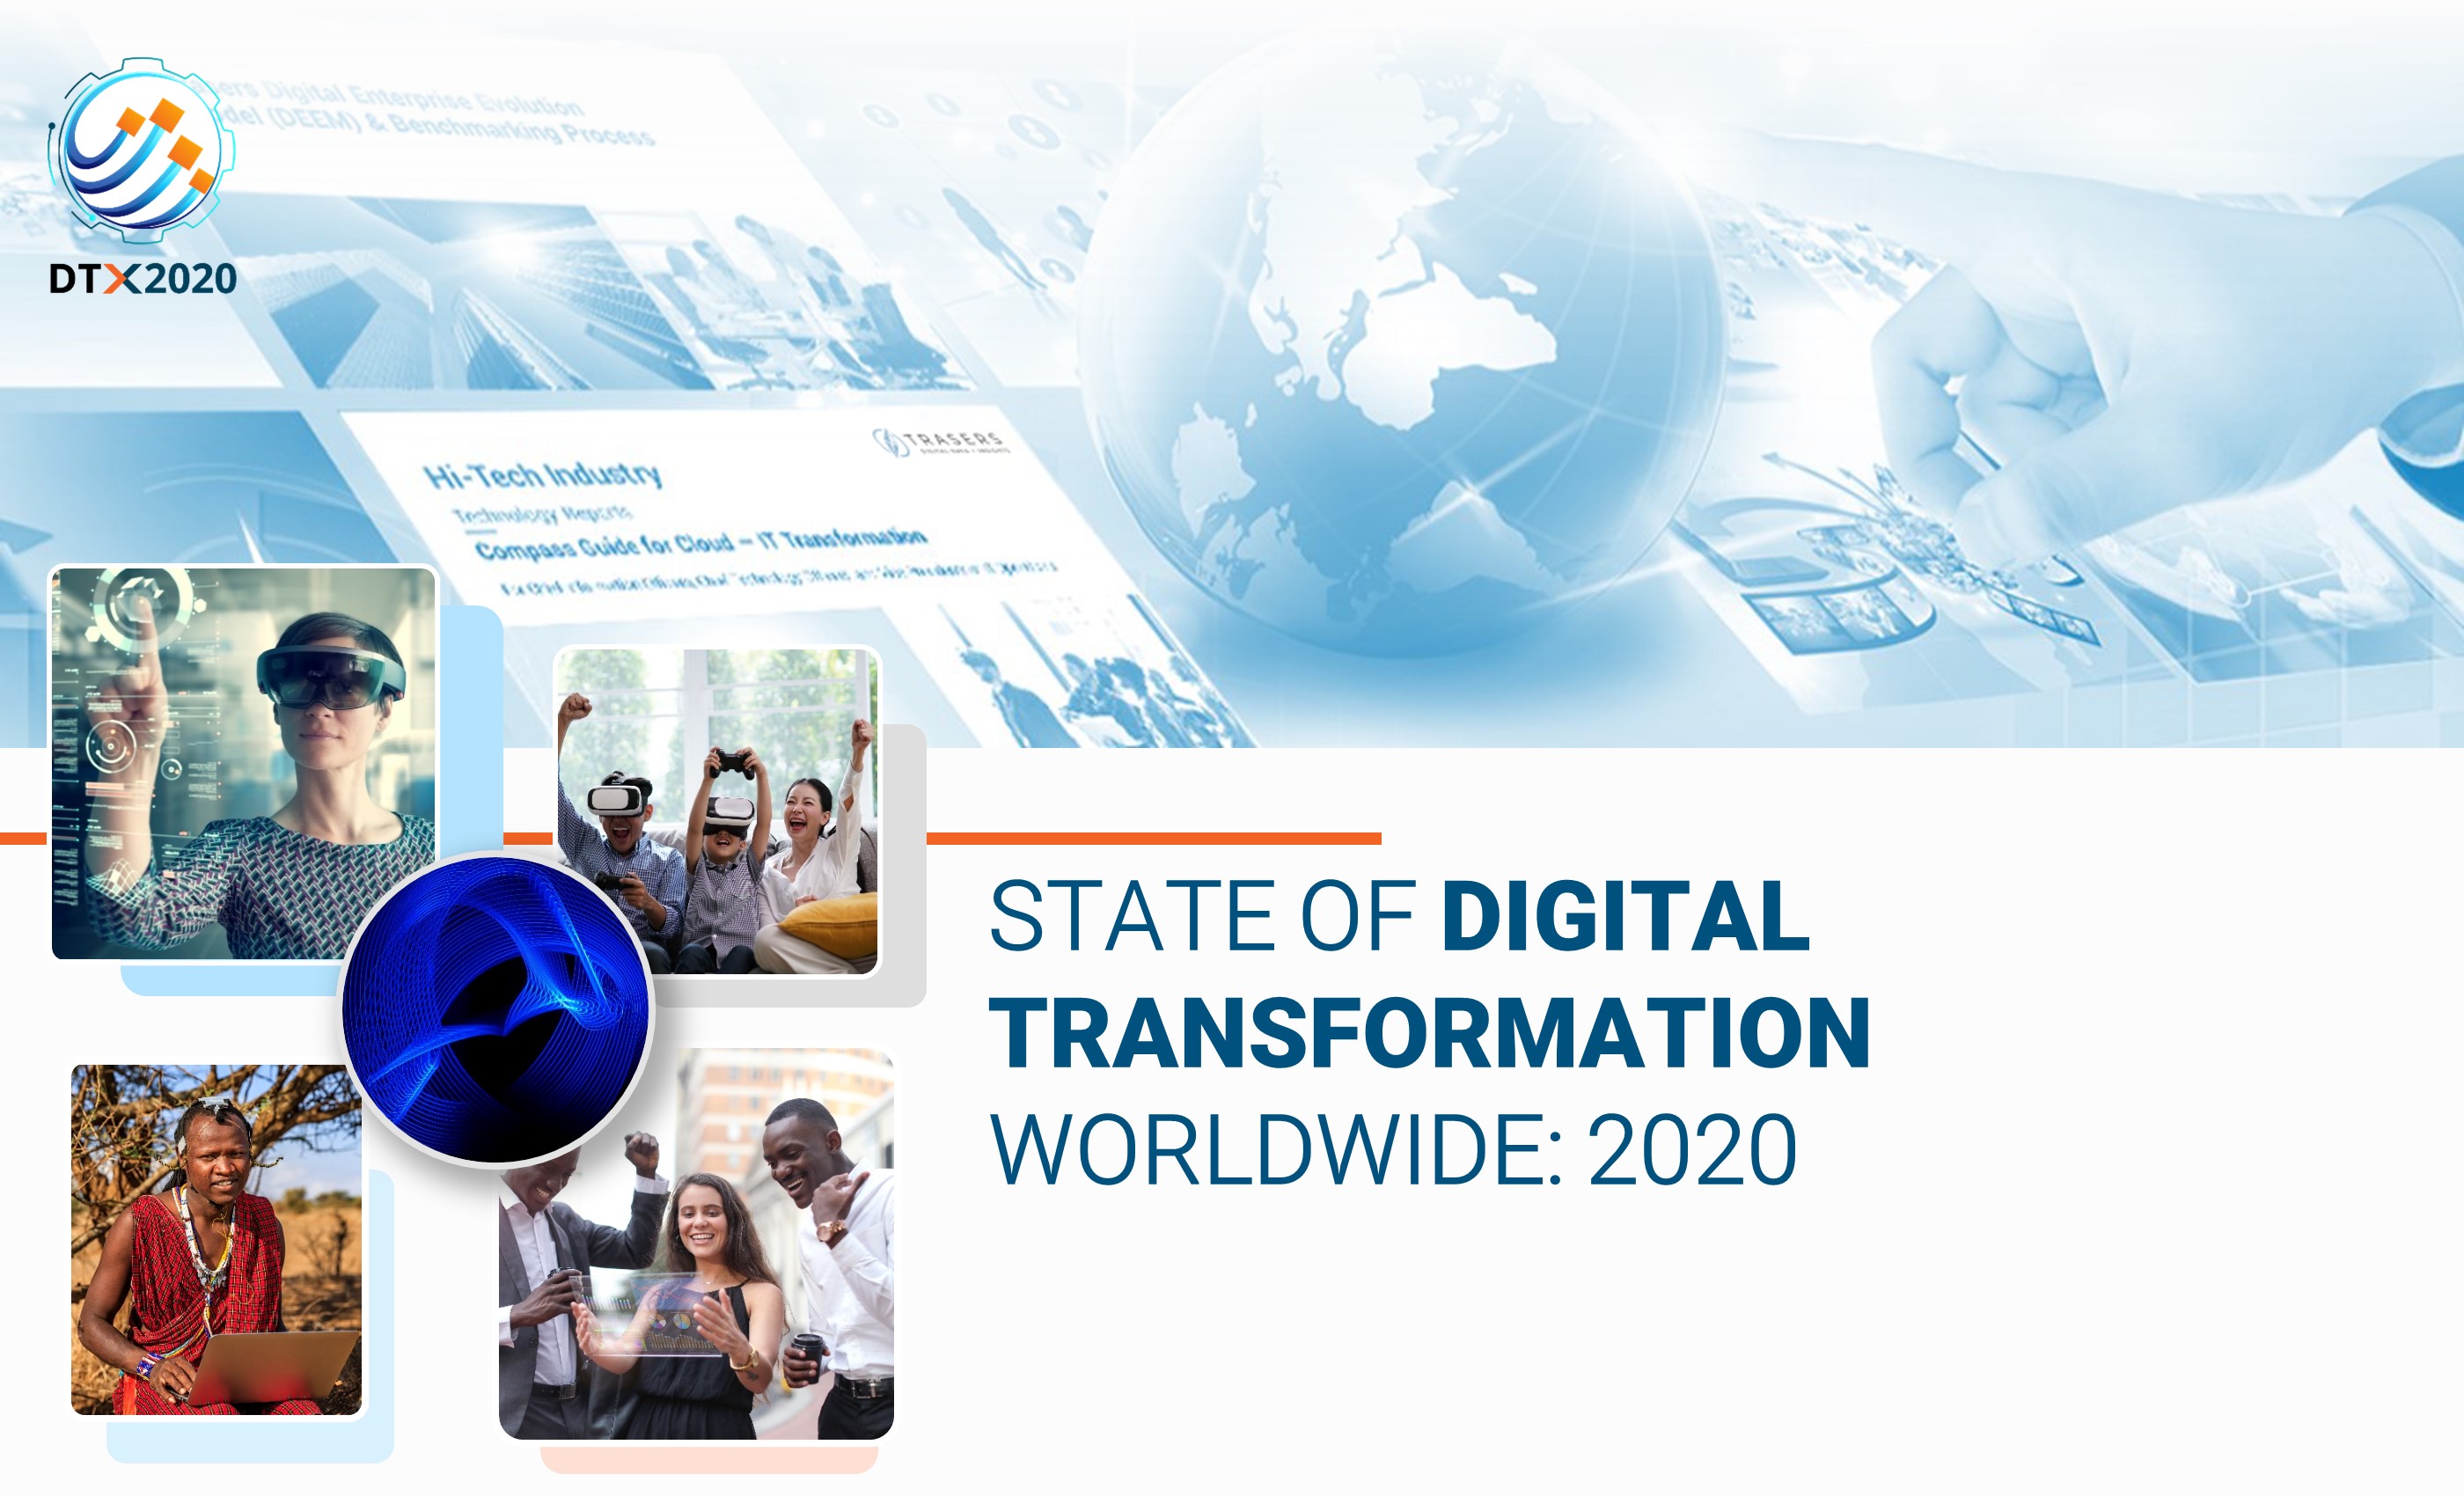 State of Digital Transformation worldwide 2020